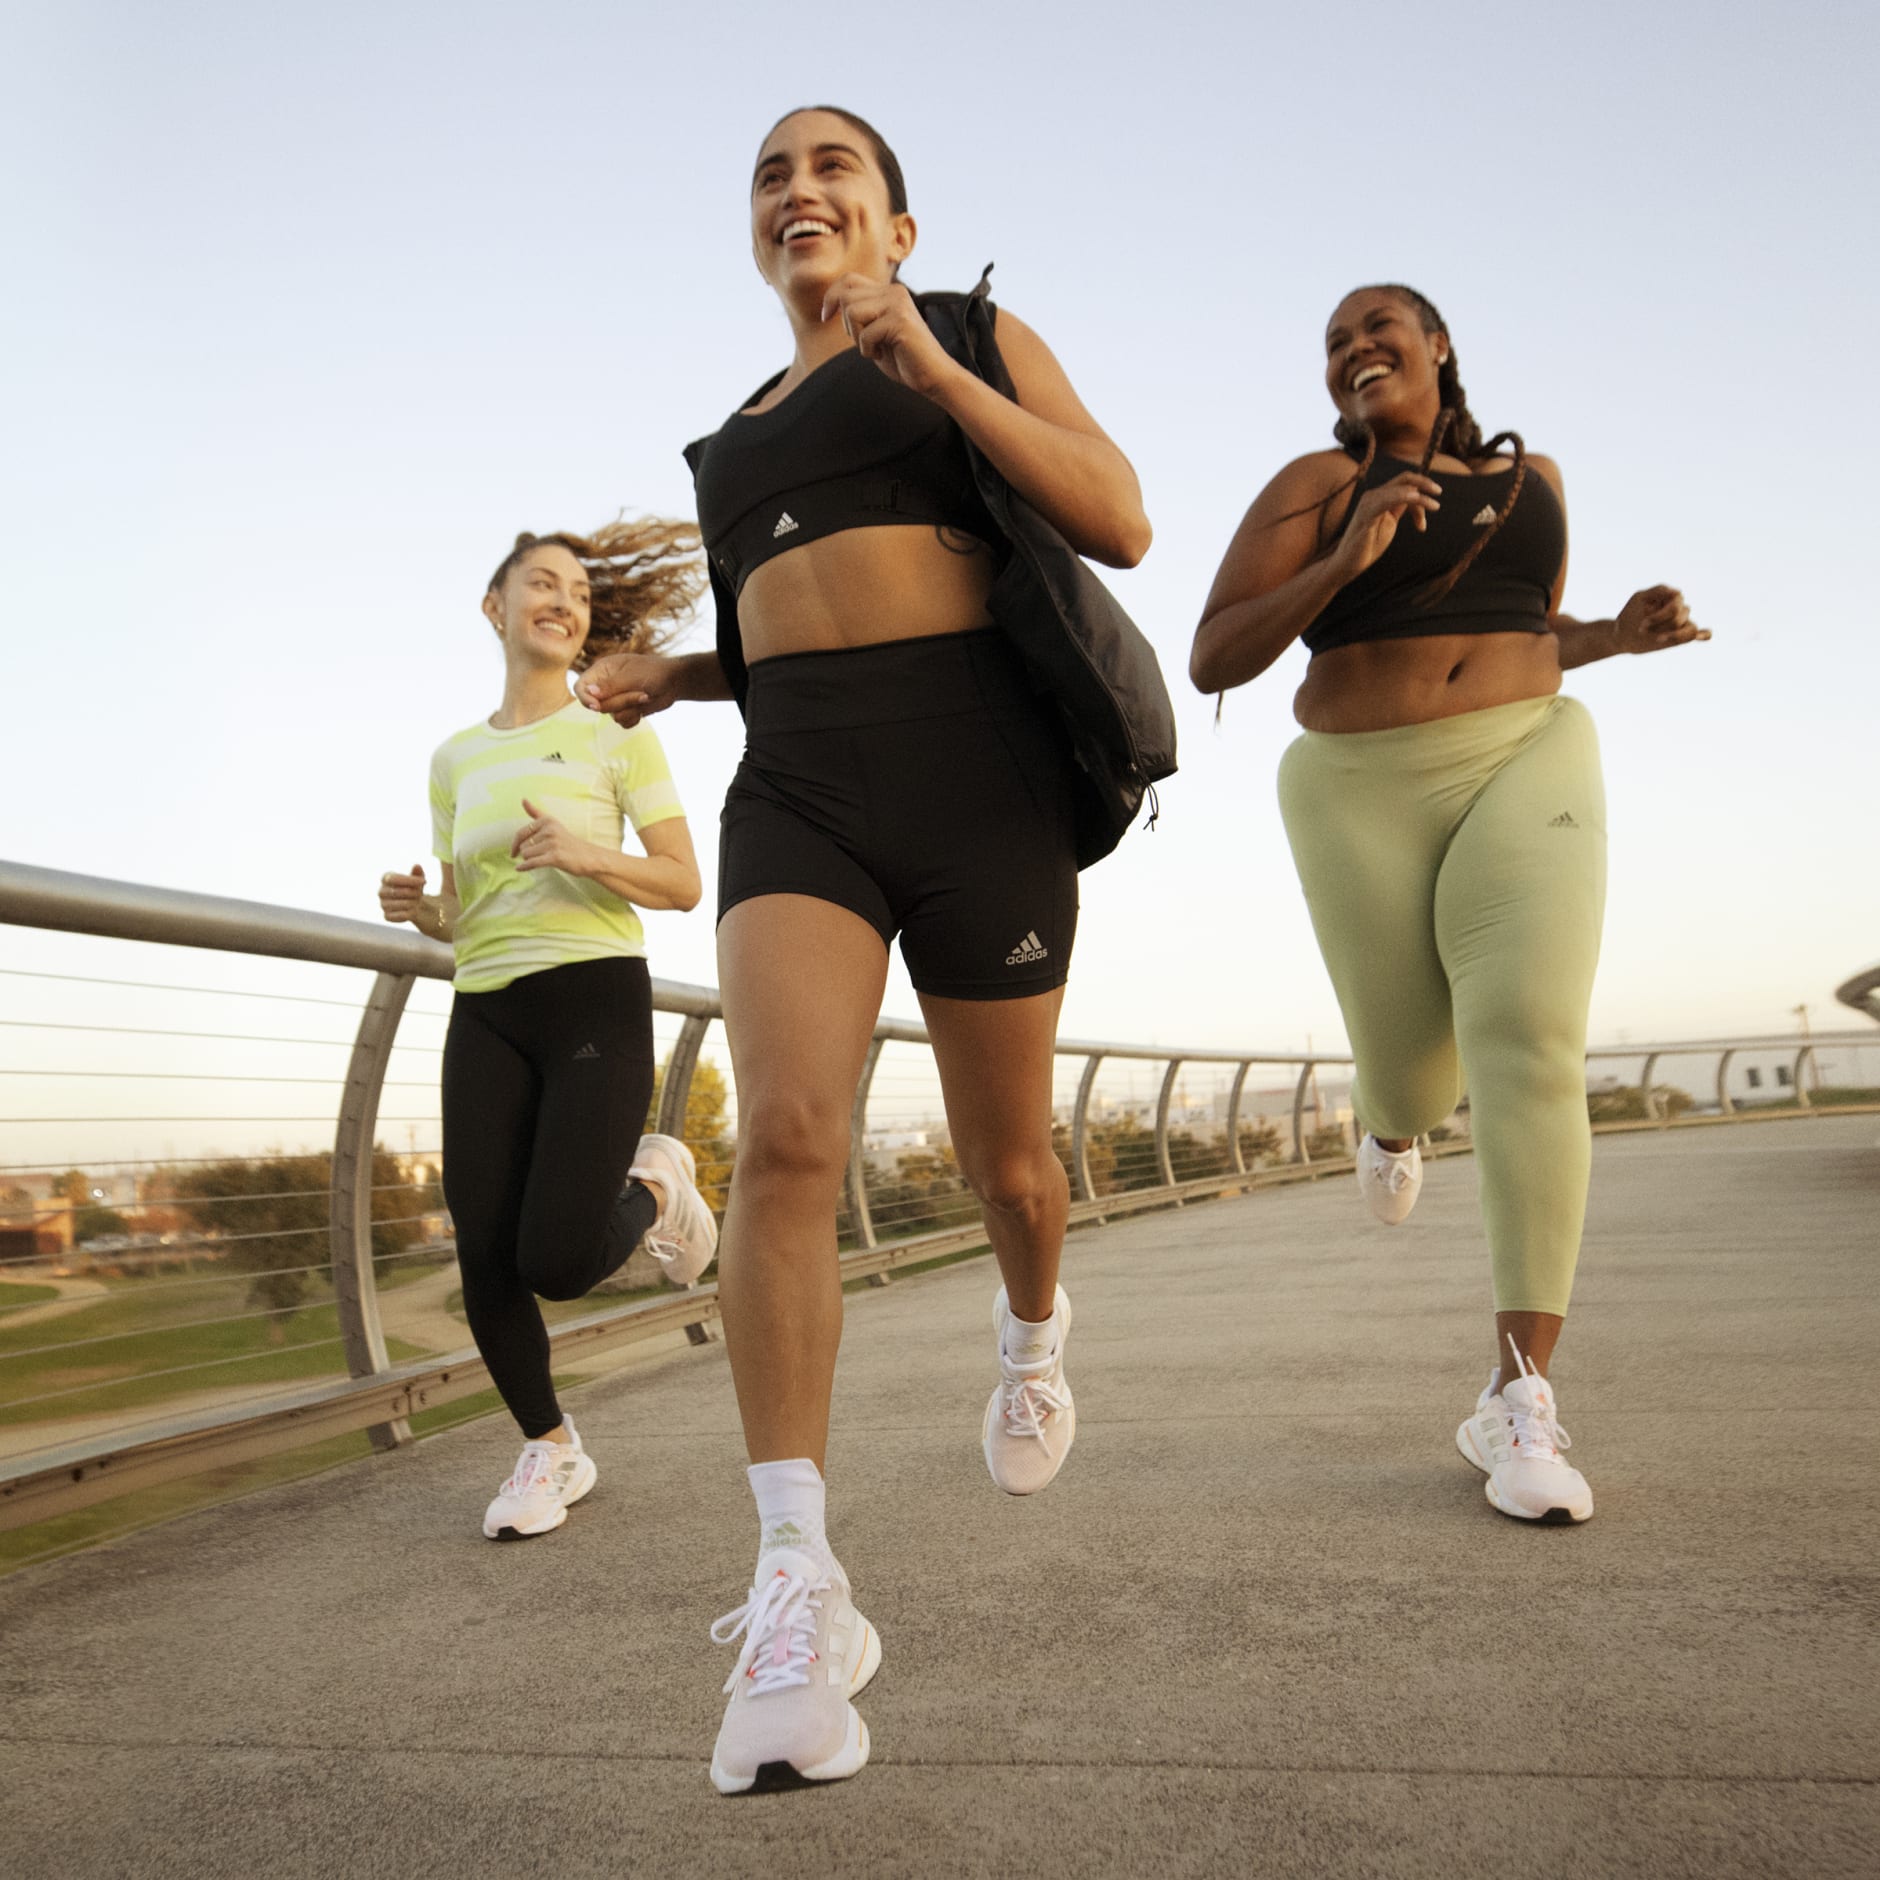 adidas FastImpact Luxe Run High-Support Women's Bra – RUNNERS SPORTS